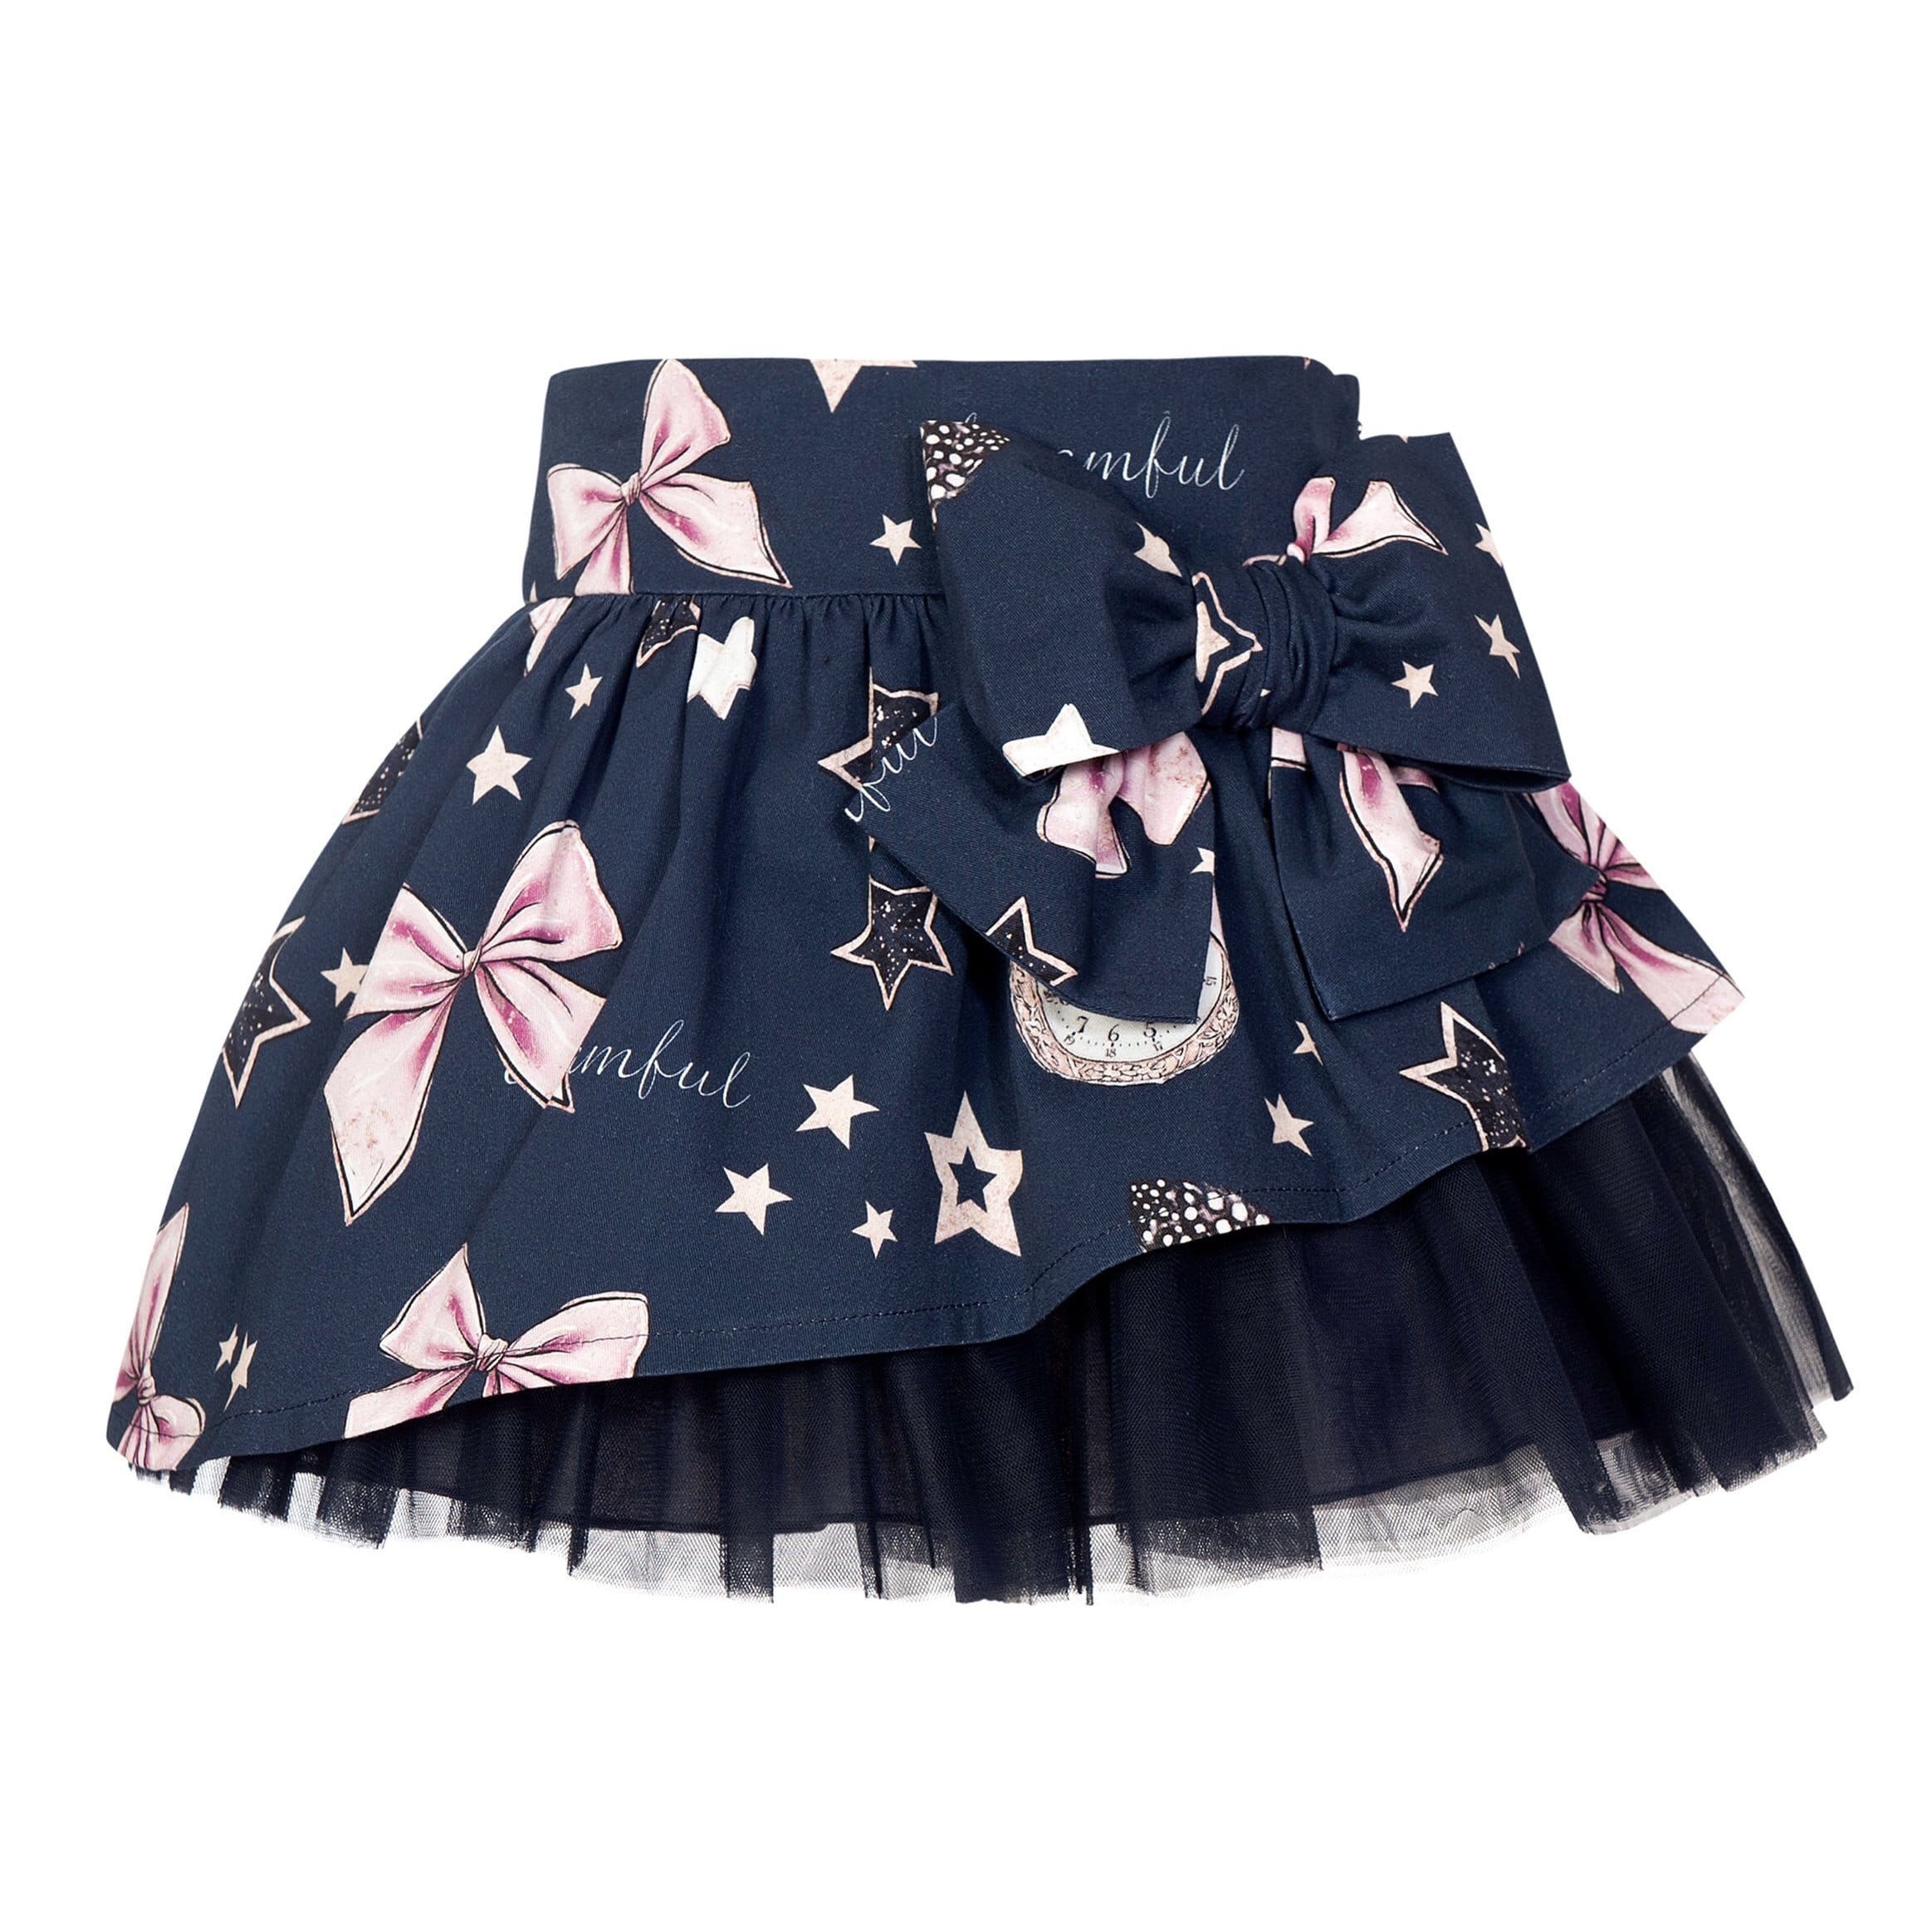 BALLOON CHIC - Bows & Star  Skirt Set  - Blue